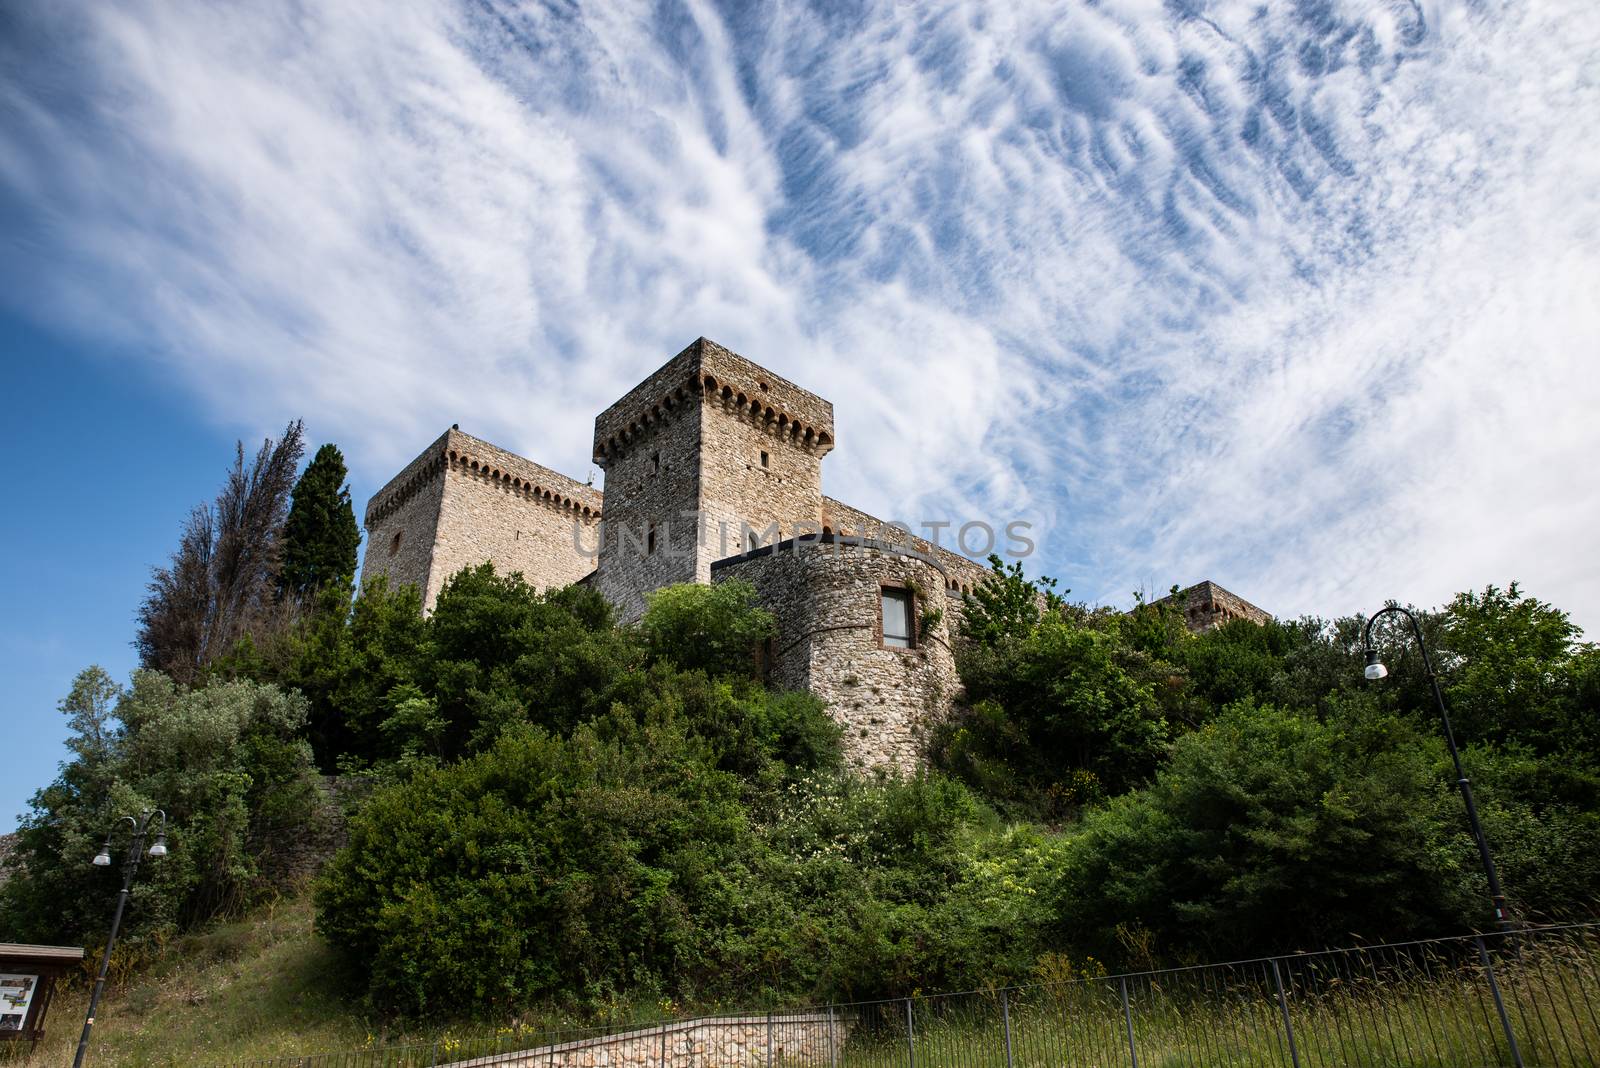 albornoz fortress on the hill above narni by carfedeph